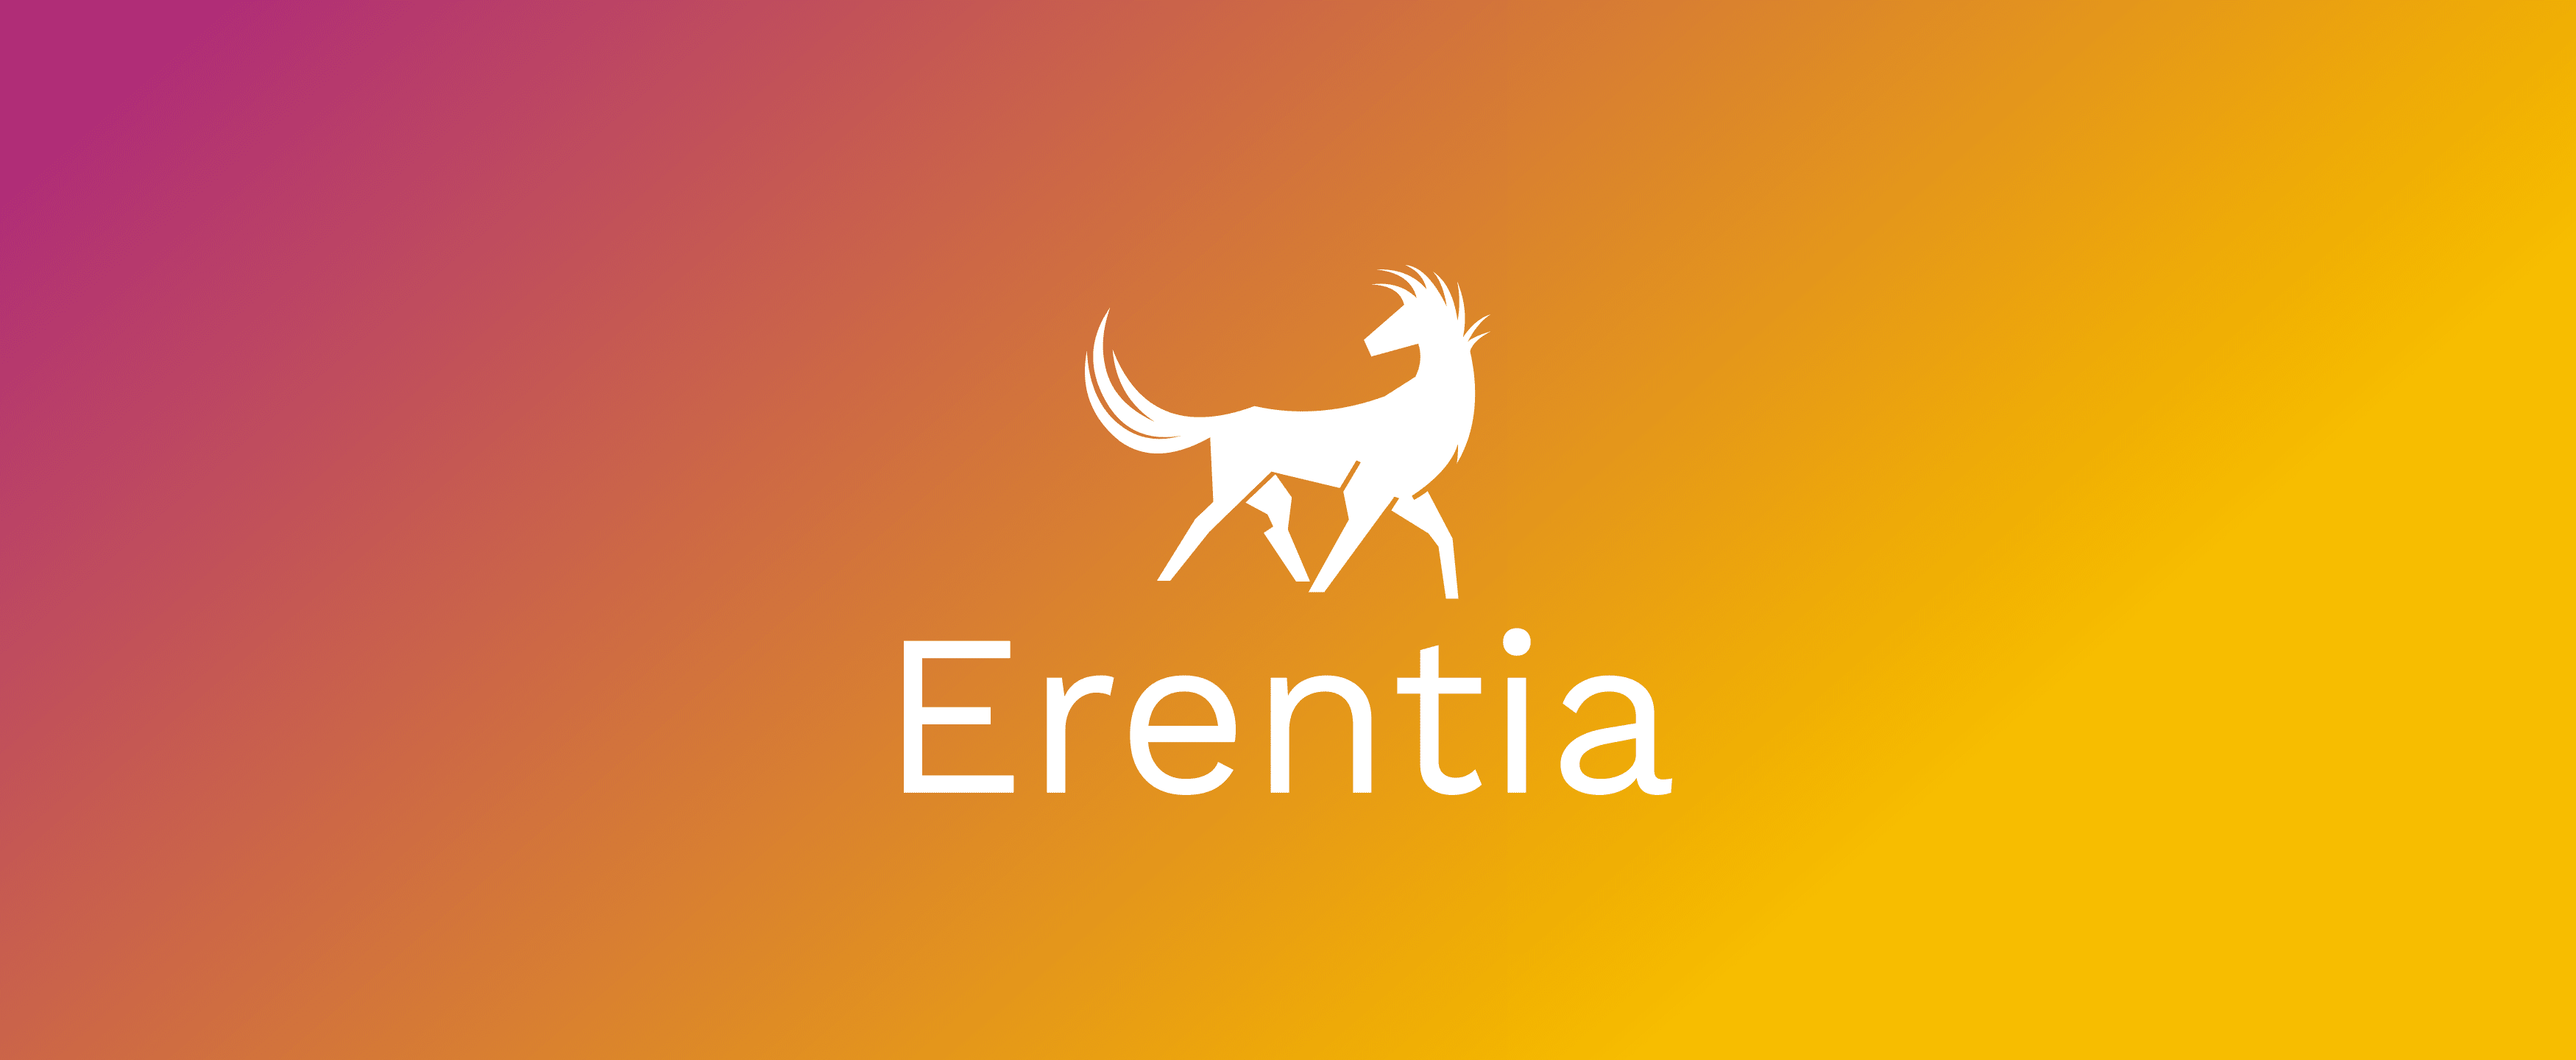 Erentia Minecraft - Survival vanilla server in Spanish - Small but friendly community - Weekly events!  - 1.19 - Premium Minecraft Server